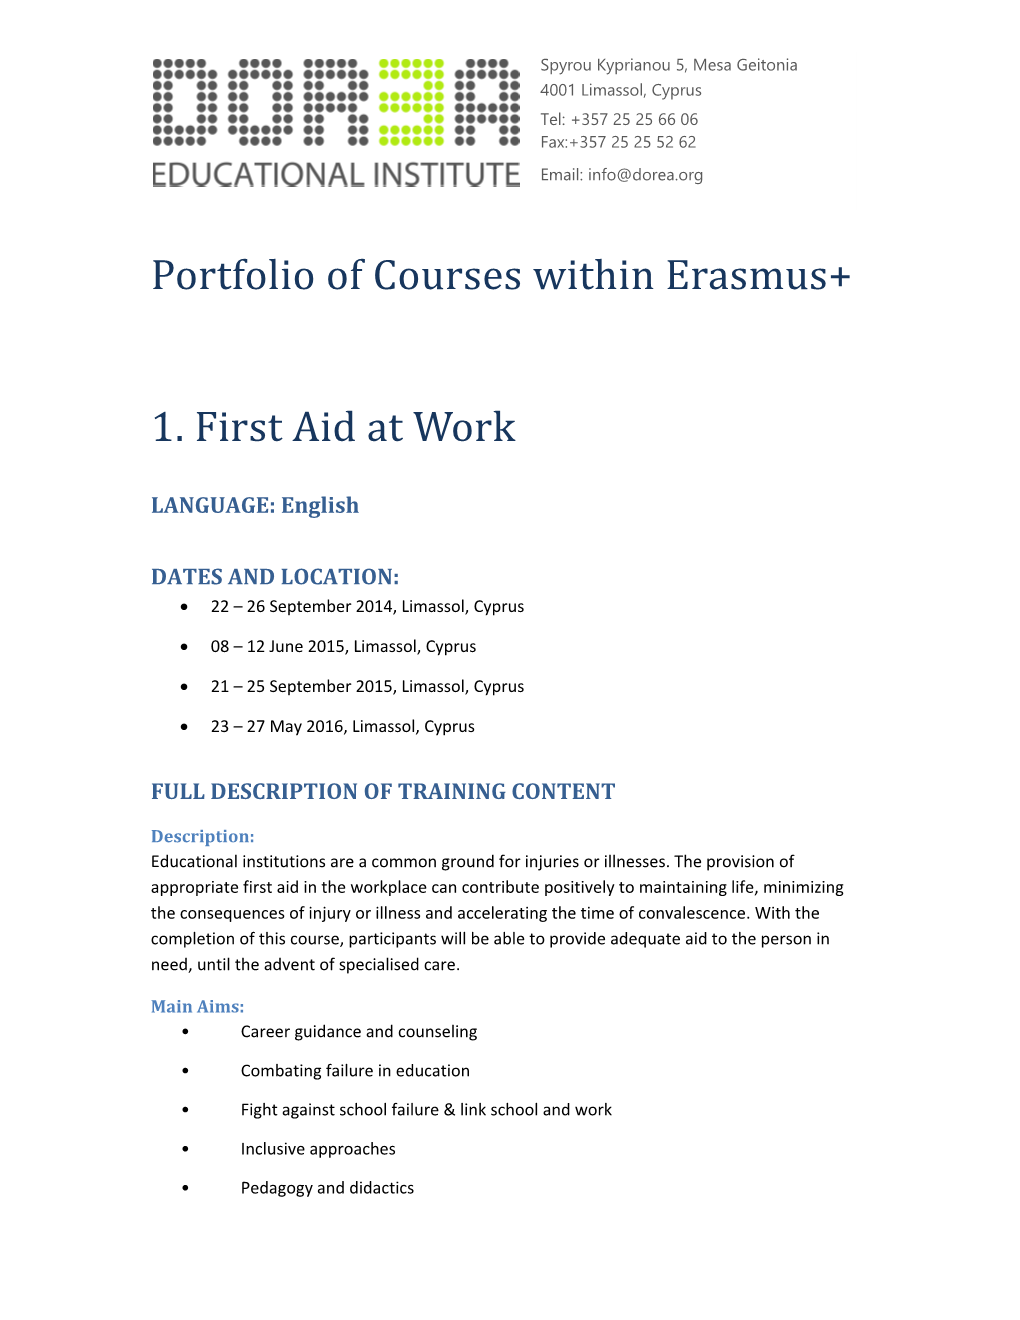 Portfolio of Courses Within Erasmus+